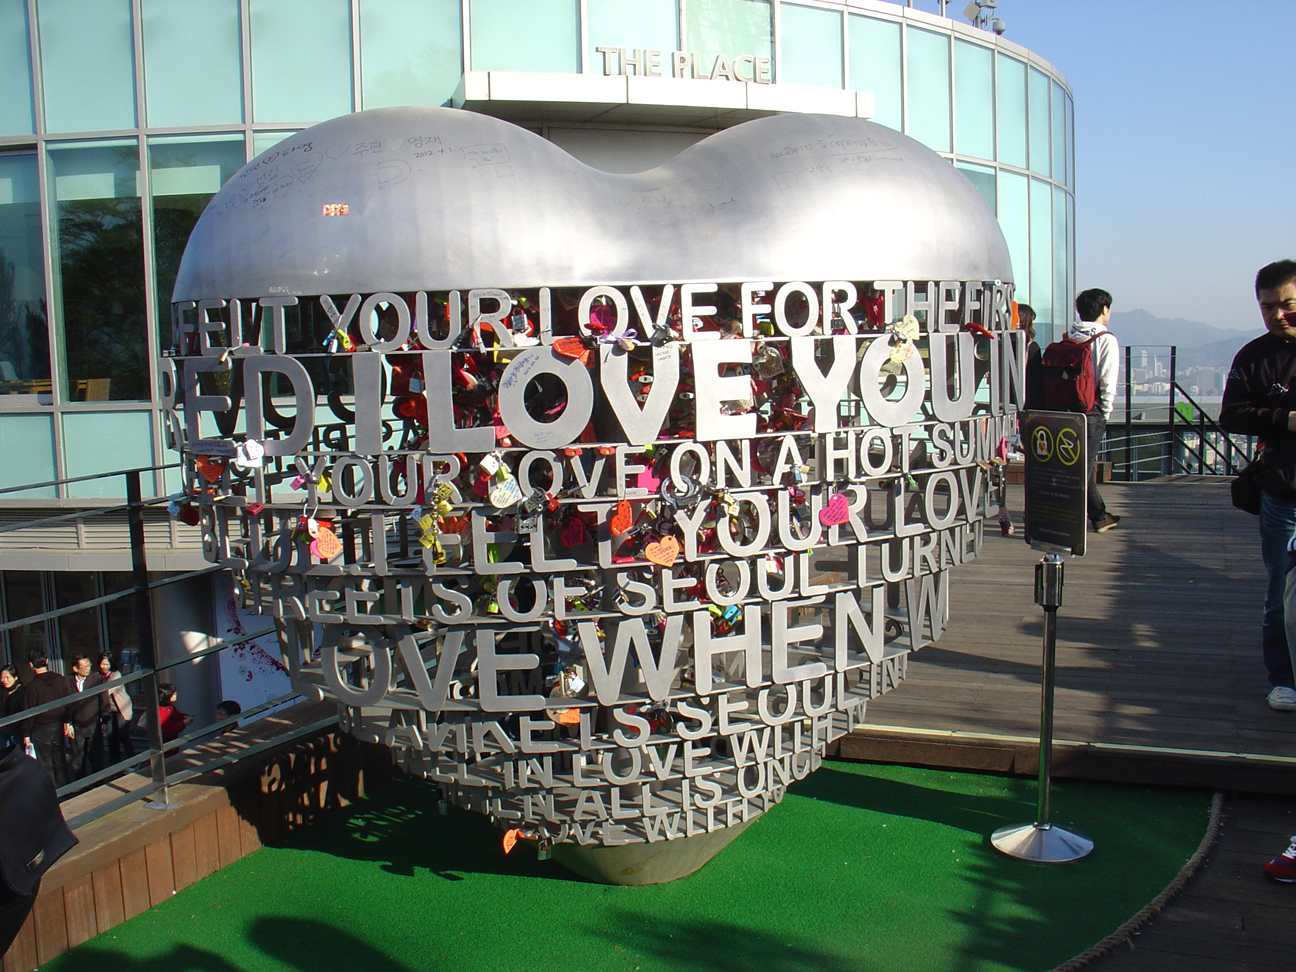 The Seoul Love Poem Sculpture.